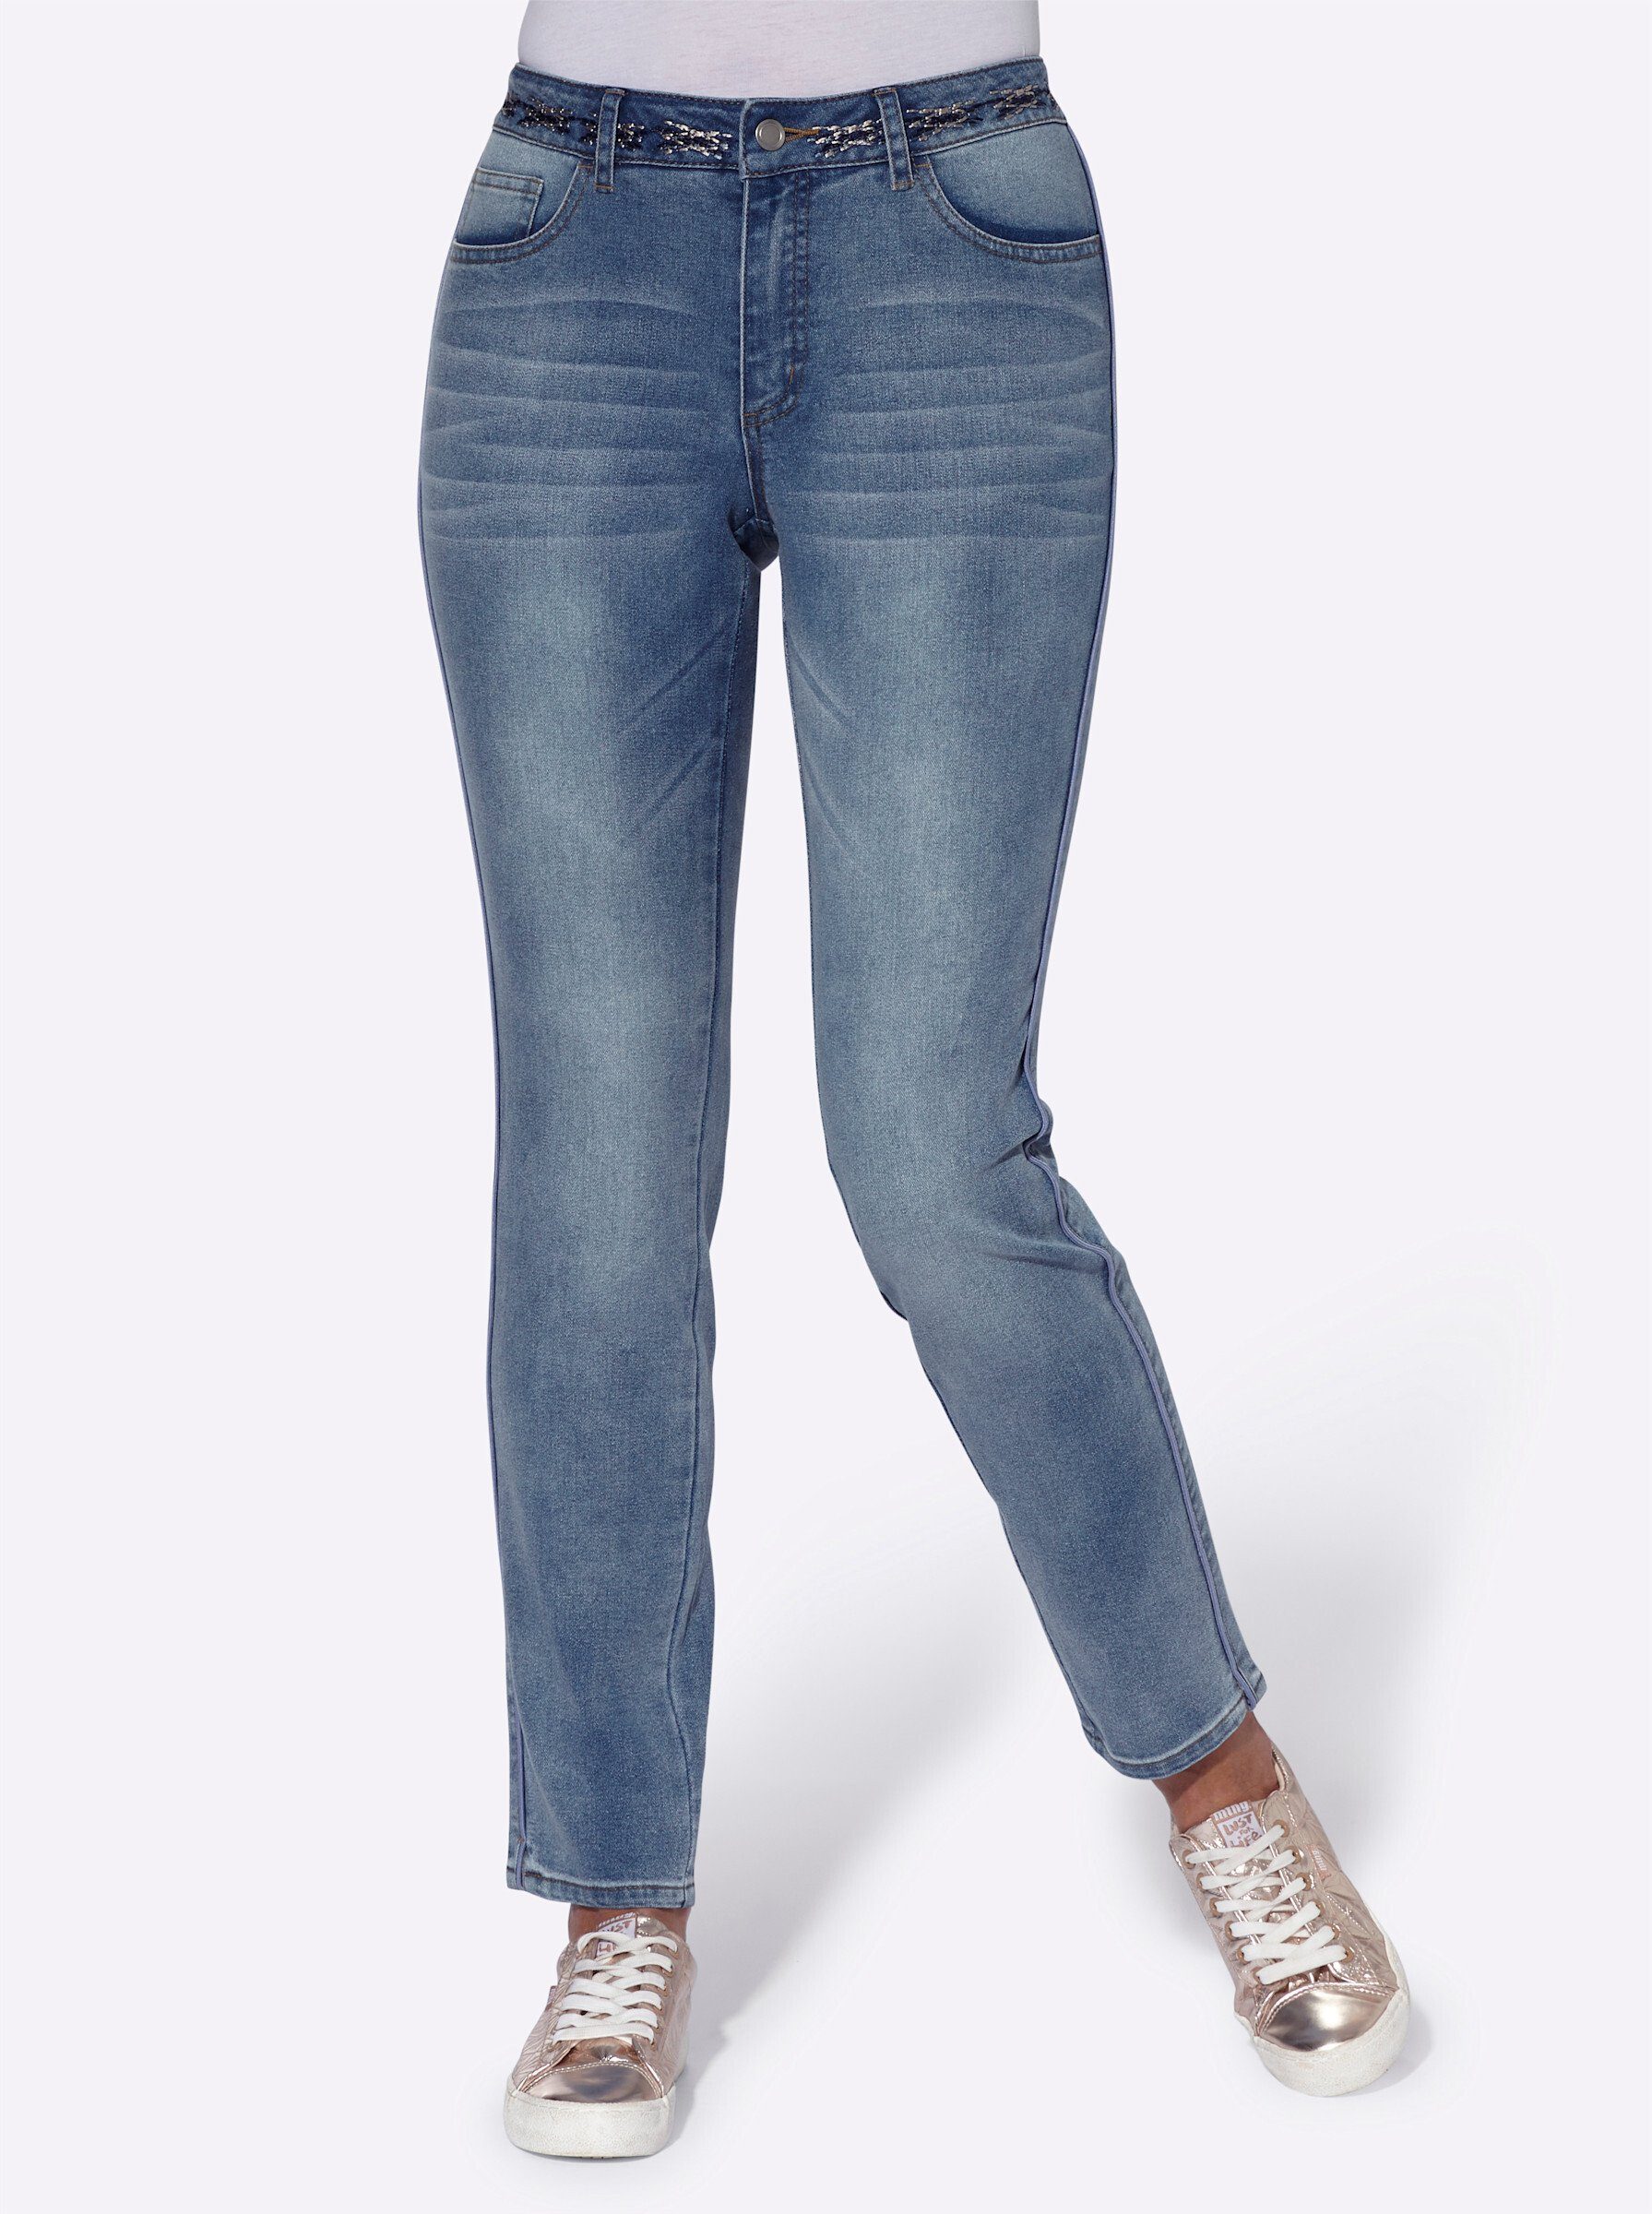 WITT WEIDEN Bequeme Jeans | Slim-Fit Jeans